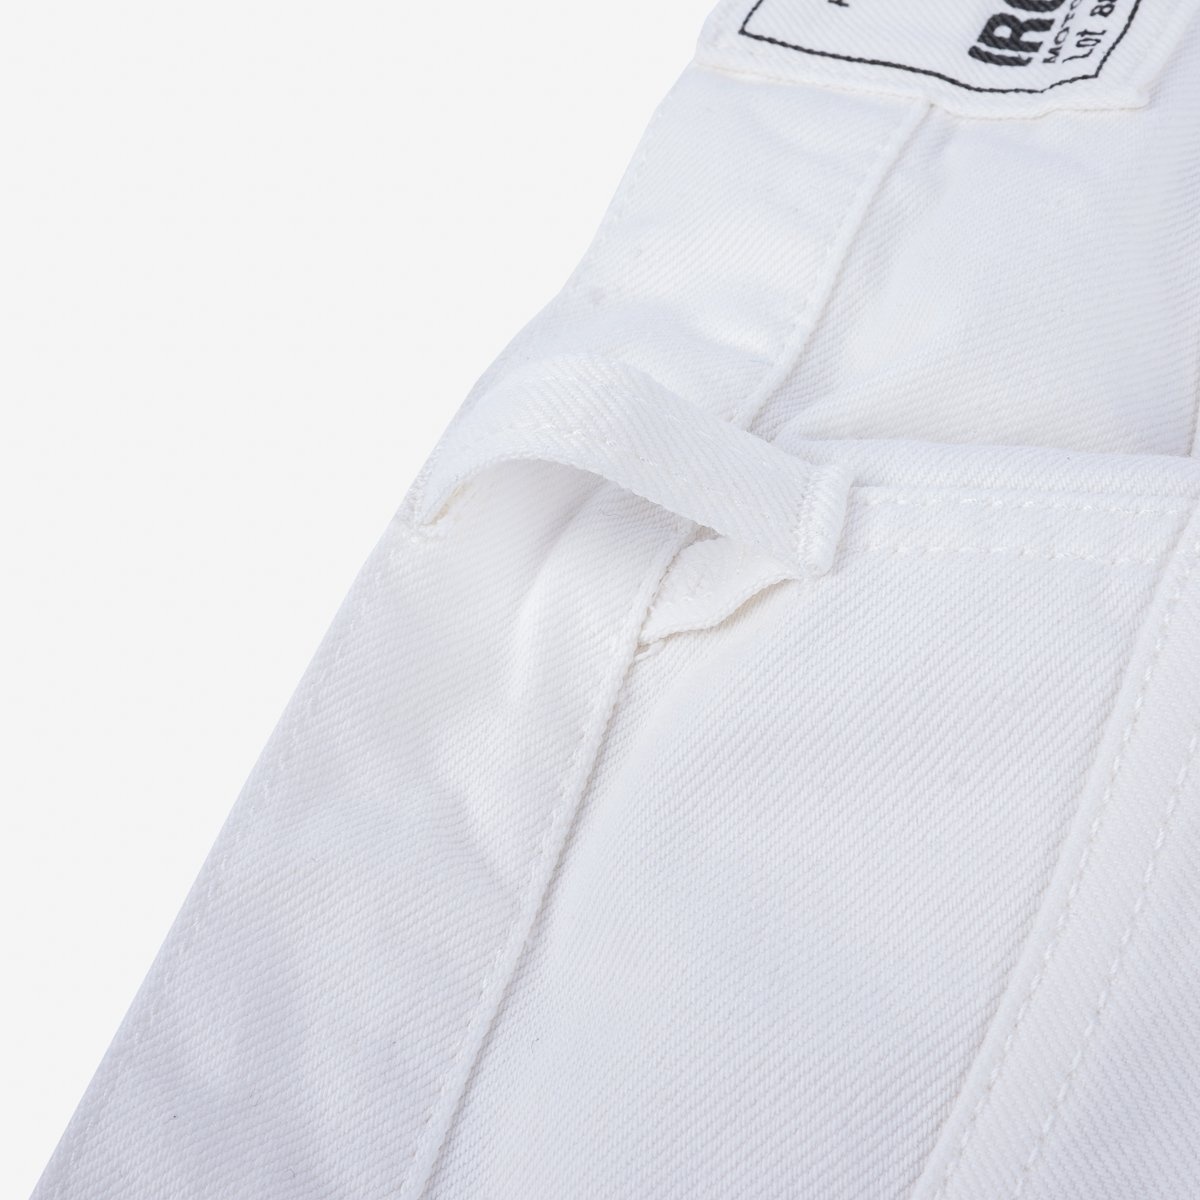 IH-888-WT 13.5oz Denim Medium/High Rise Tapered Cut Jeans - White - 9